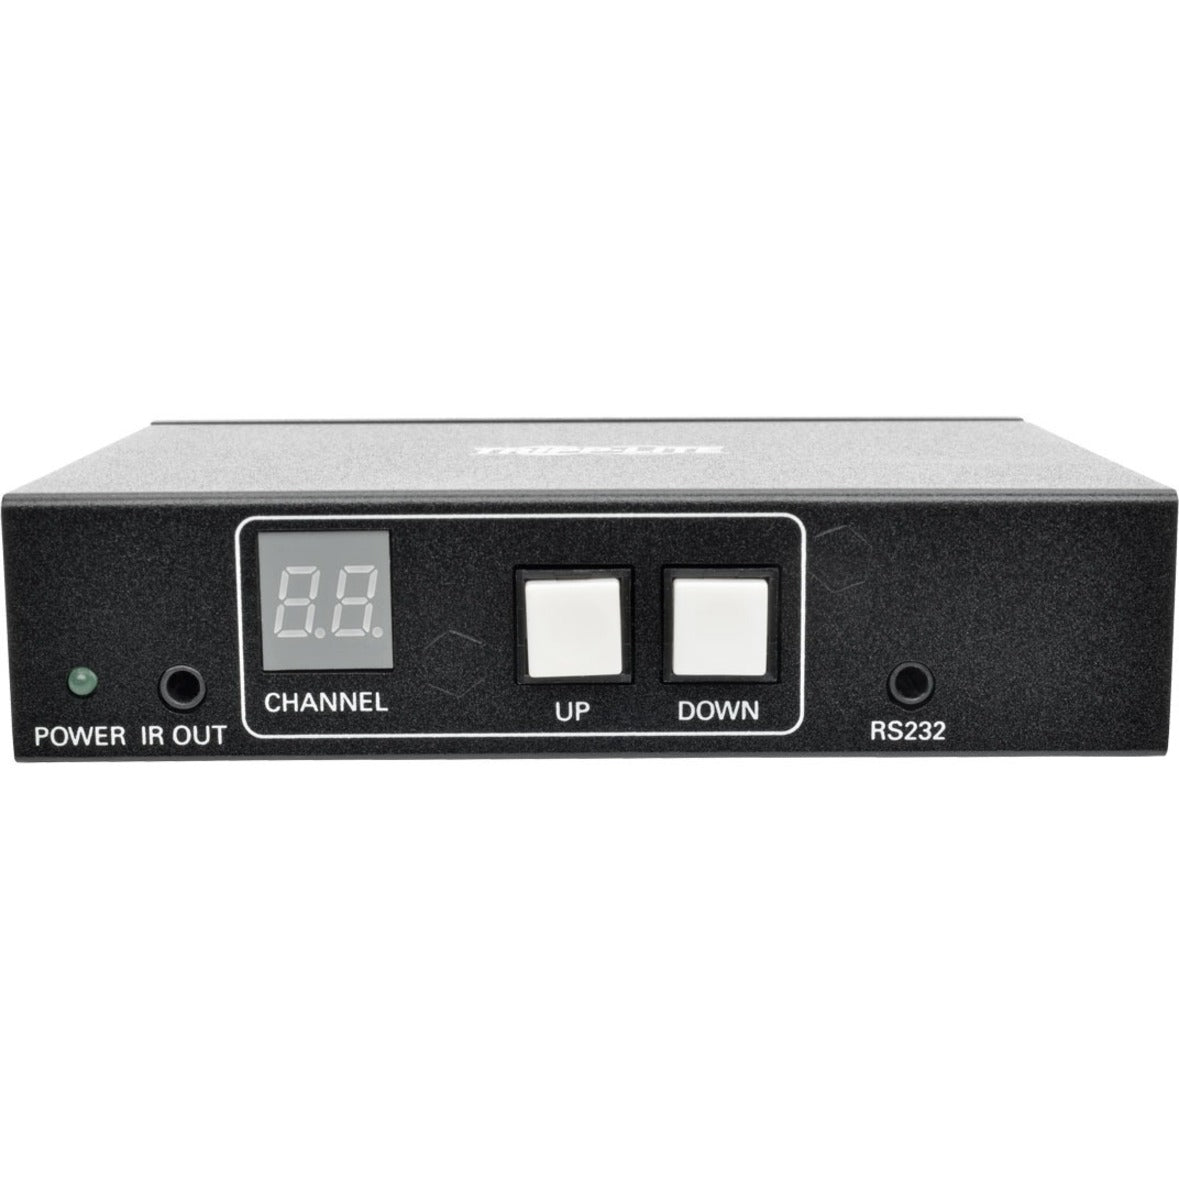 Tripp Lite B160-001-DPSI Transmitter Unit, Video Extender Transmitter, 1920 x 1440 Maximum Video Resolution, 1 Year Limited Warranty